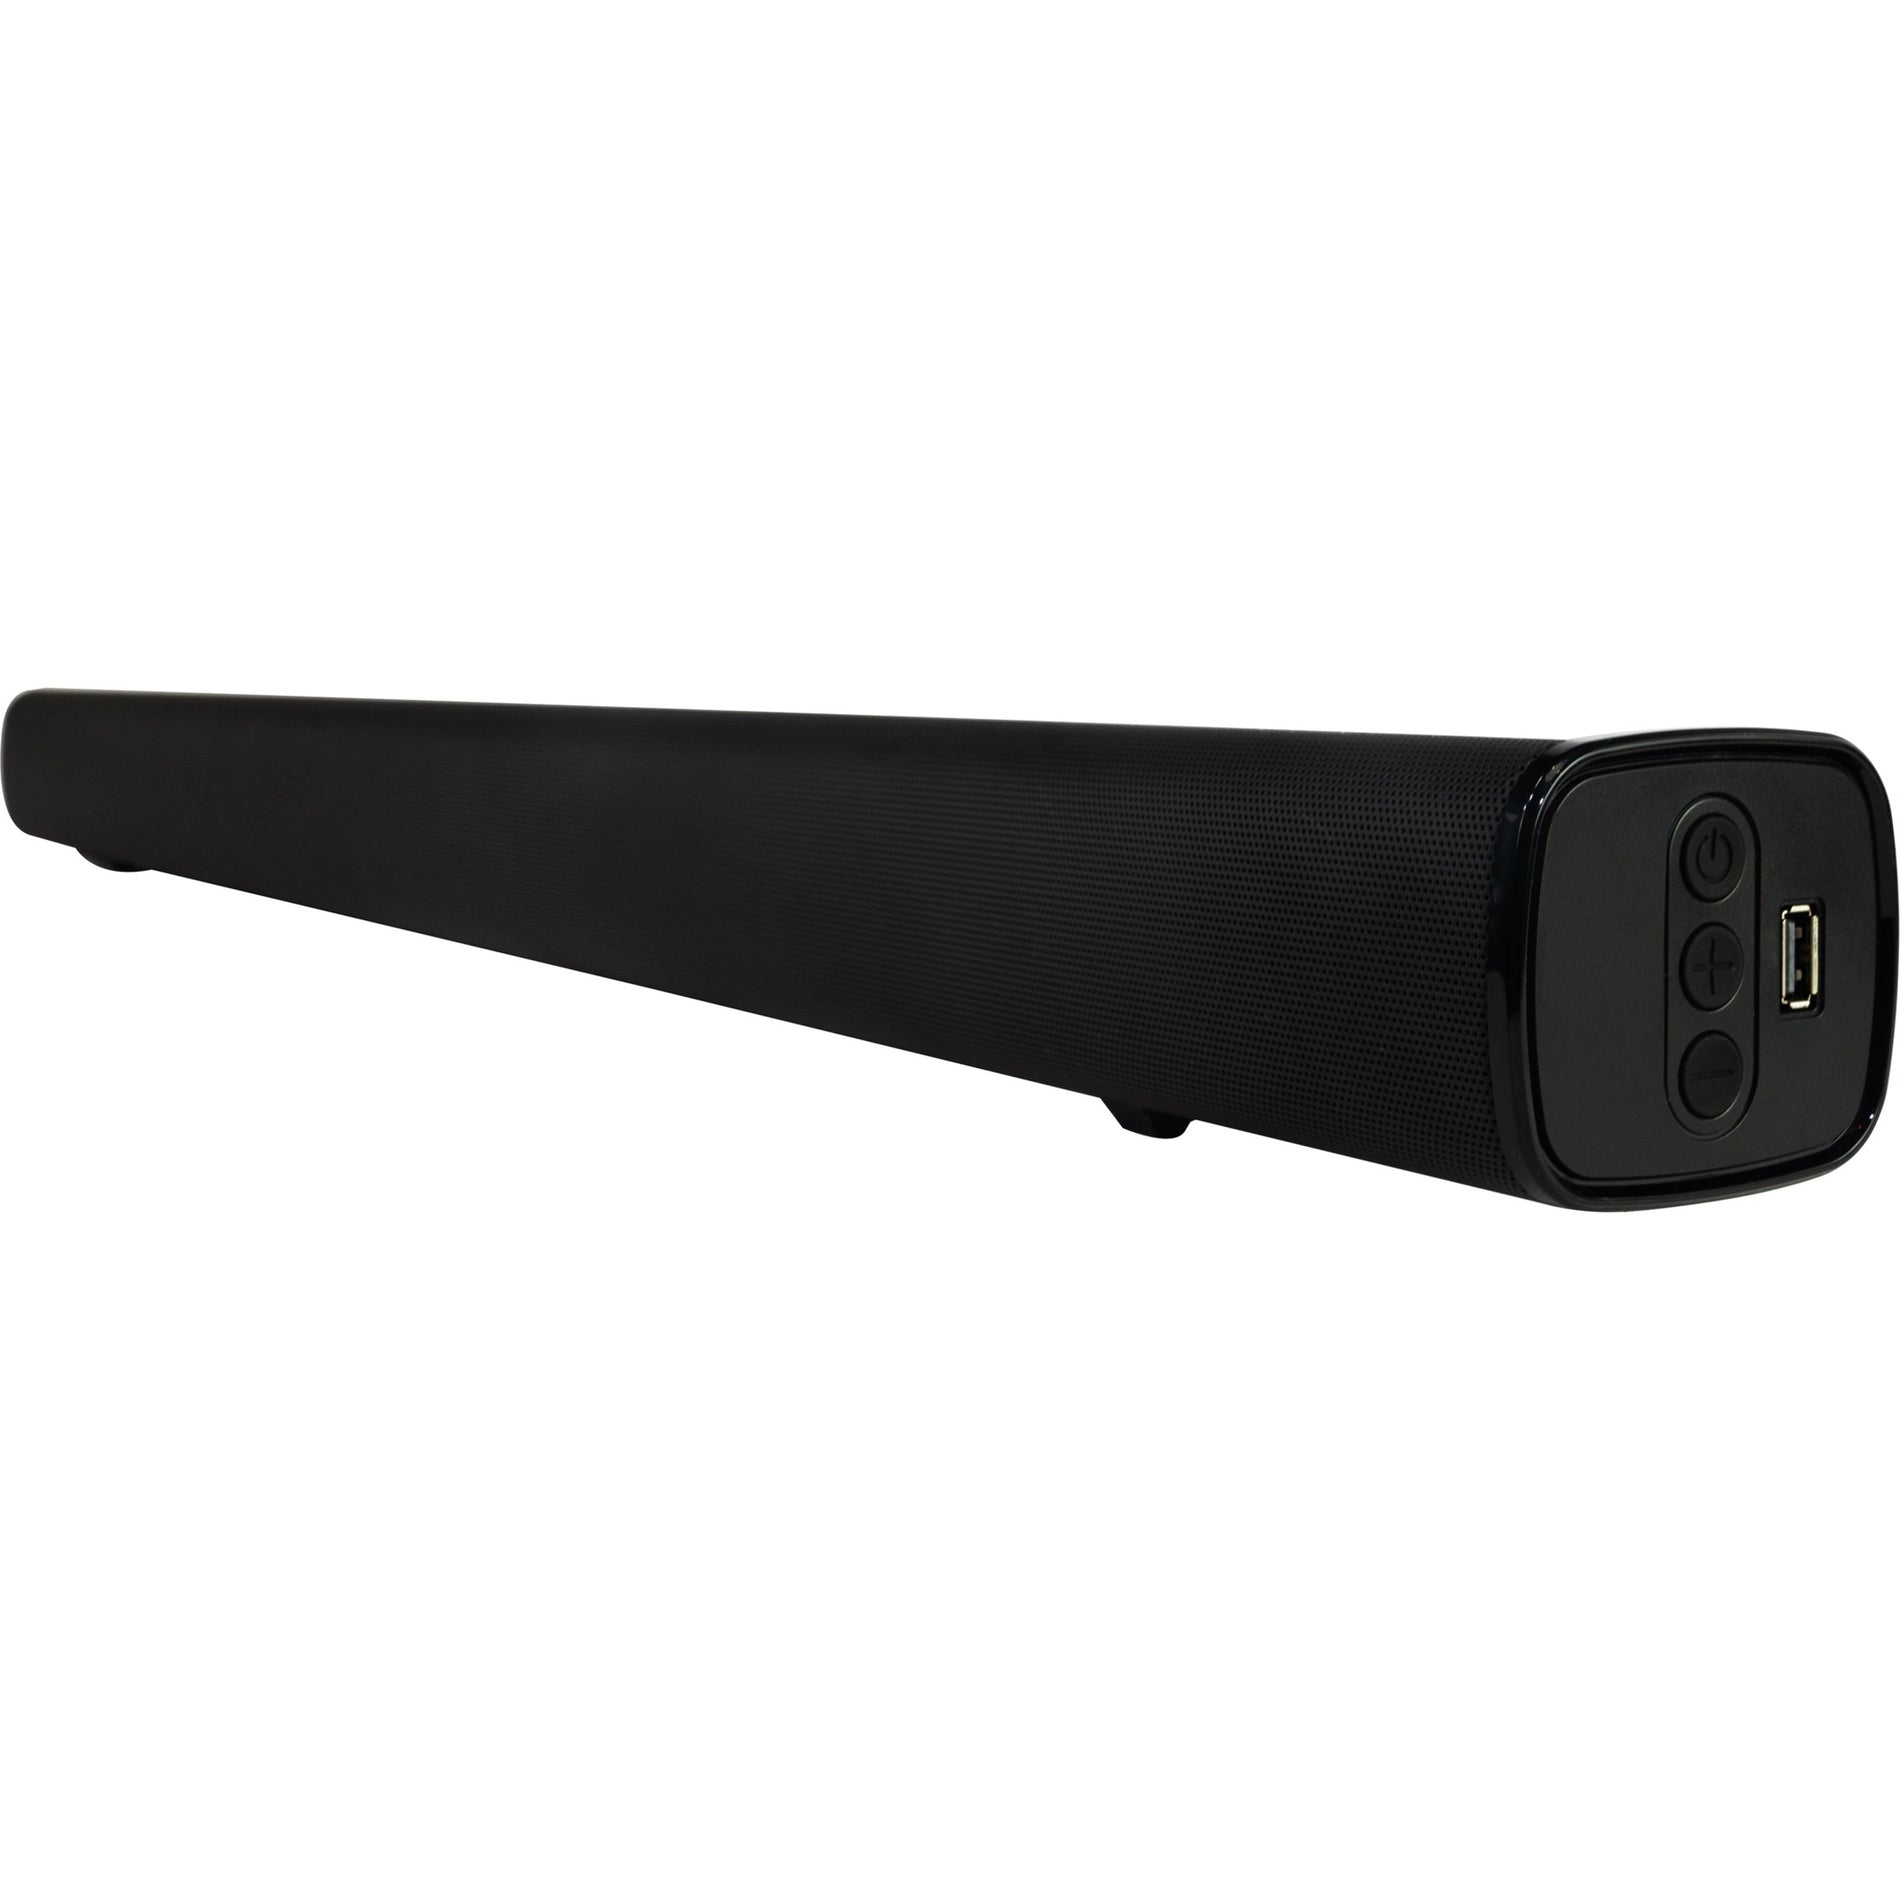 AVerMedia GS-68C Soundbar With Subwoofer 2.1 Bluetooth Speaker - 80W RMS